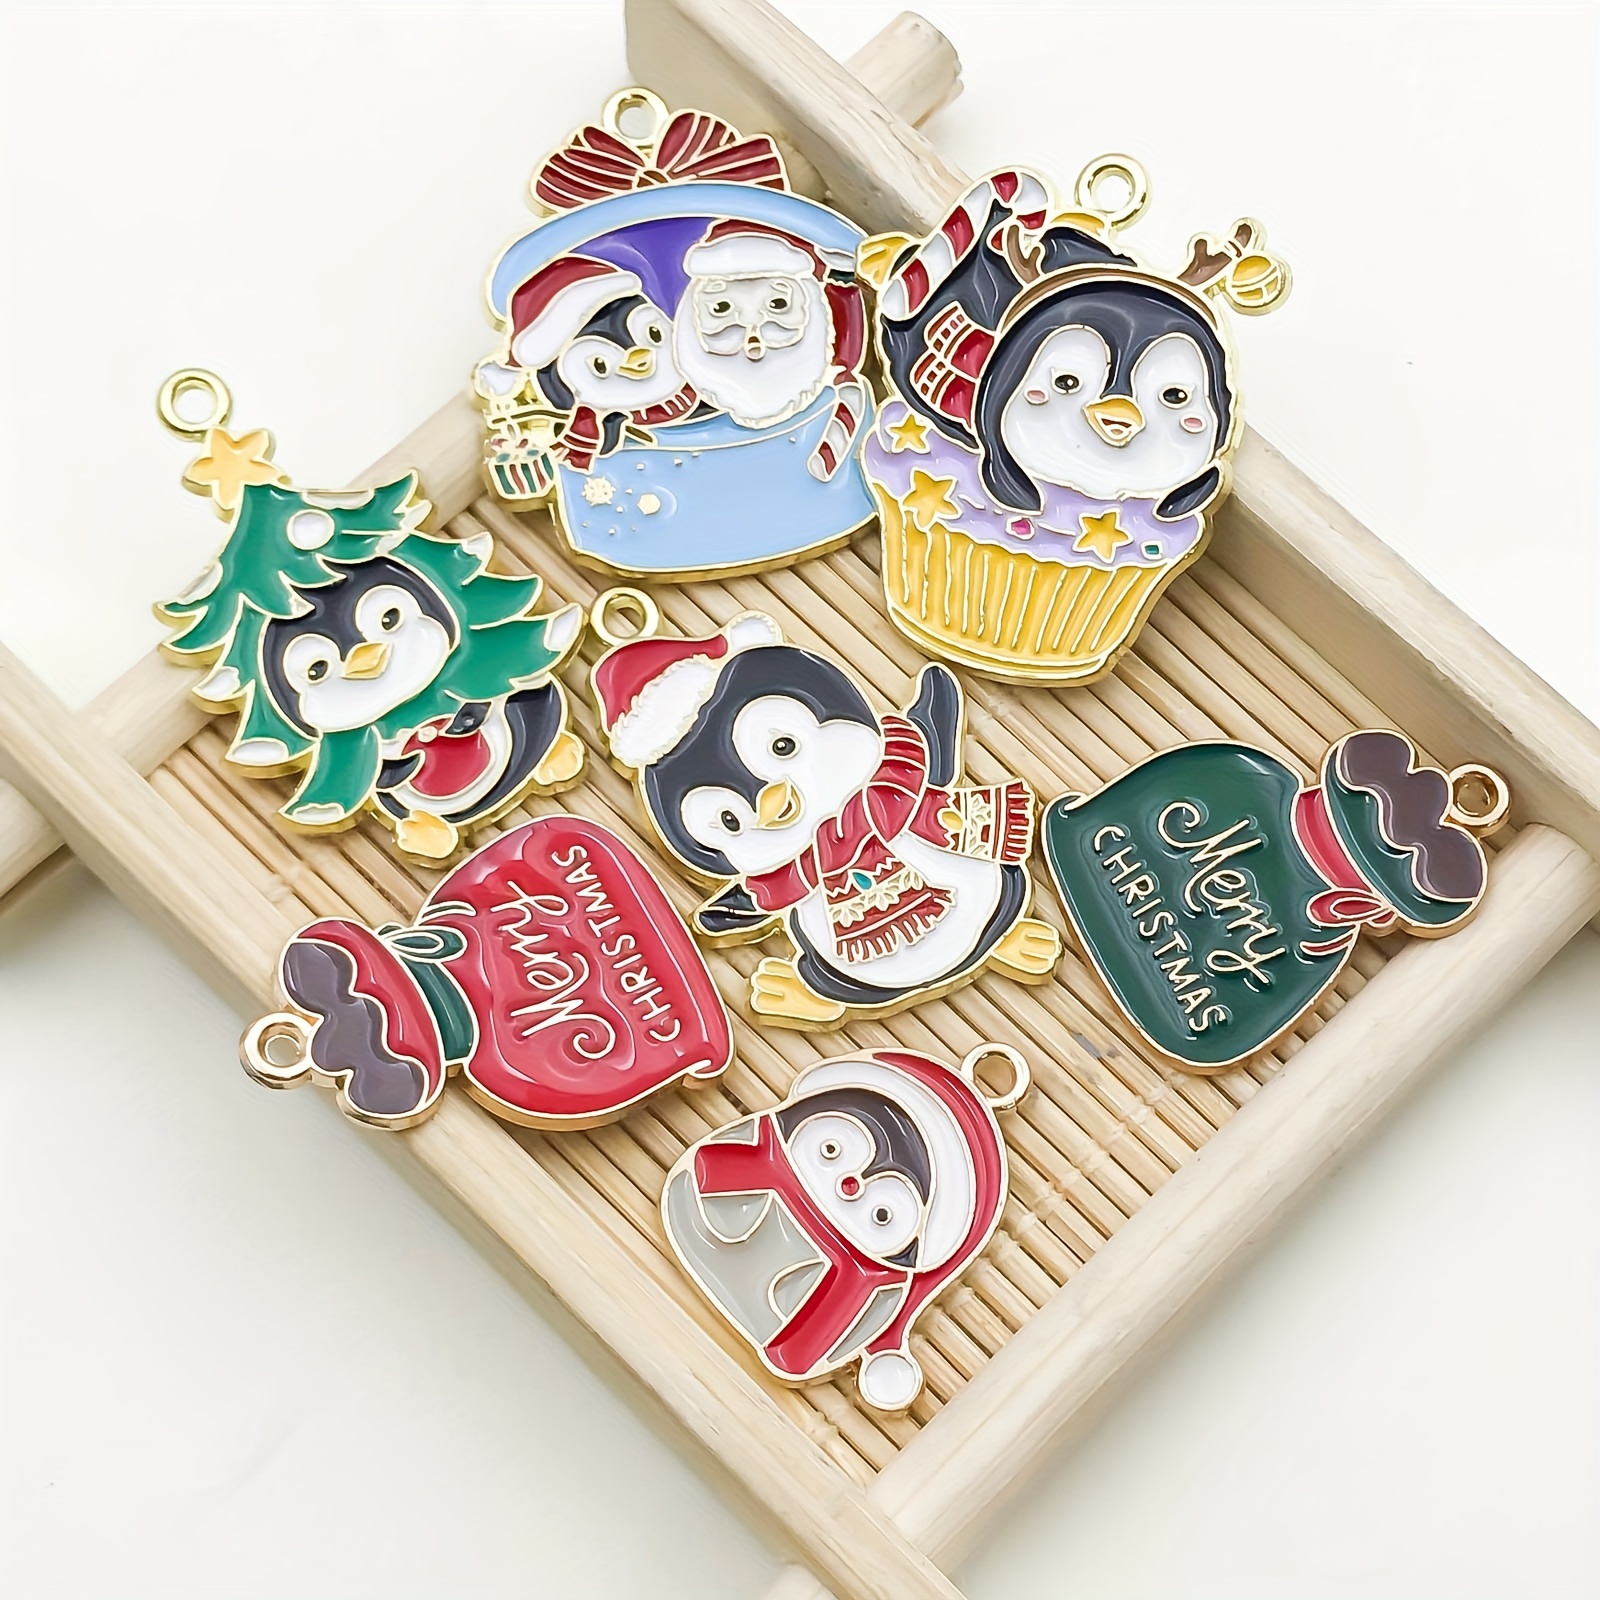 Anime Disney Lilo & Stitch alliage charme accessoires Noël